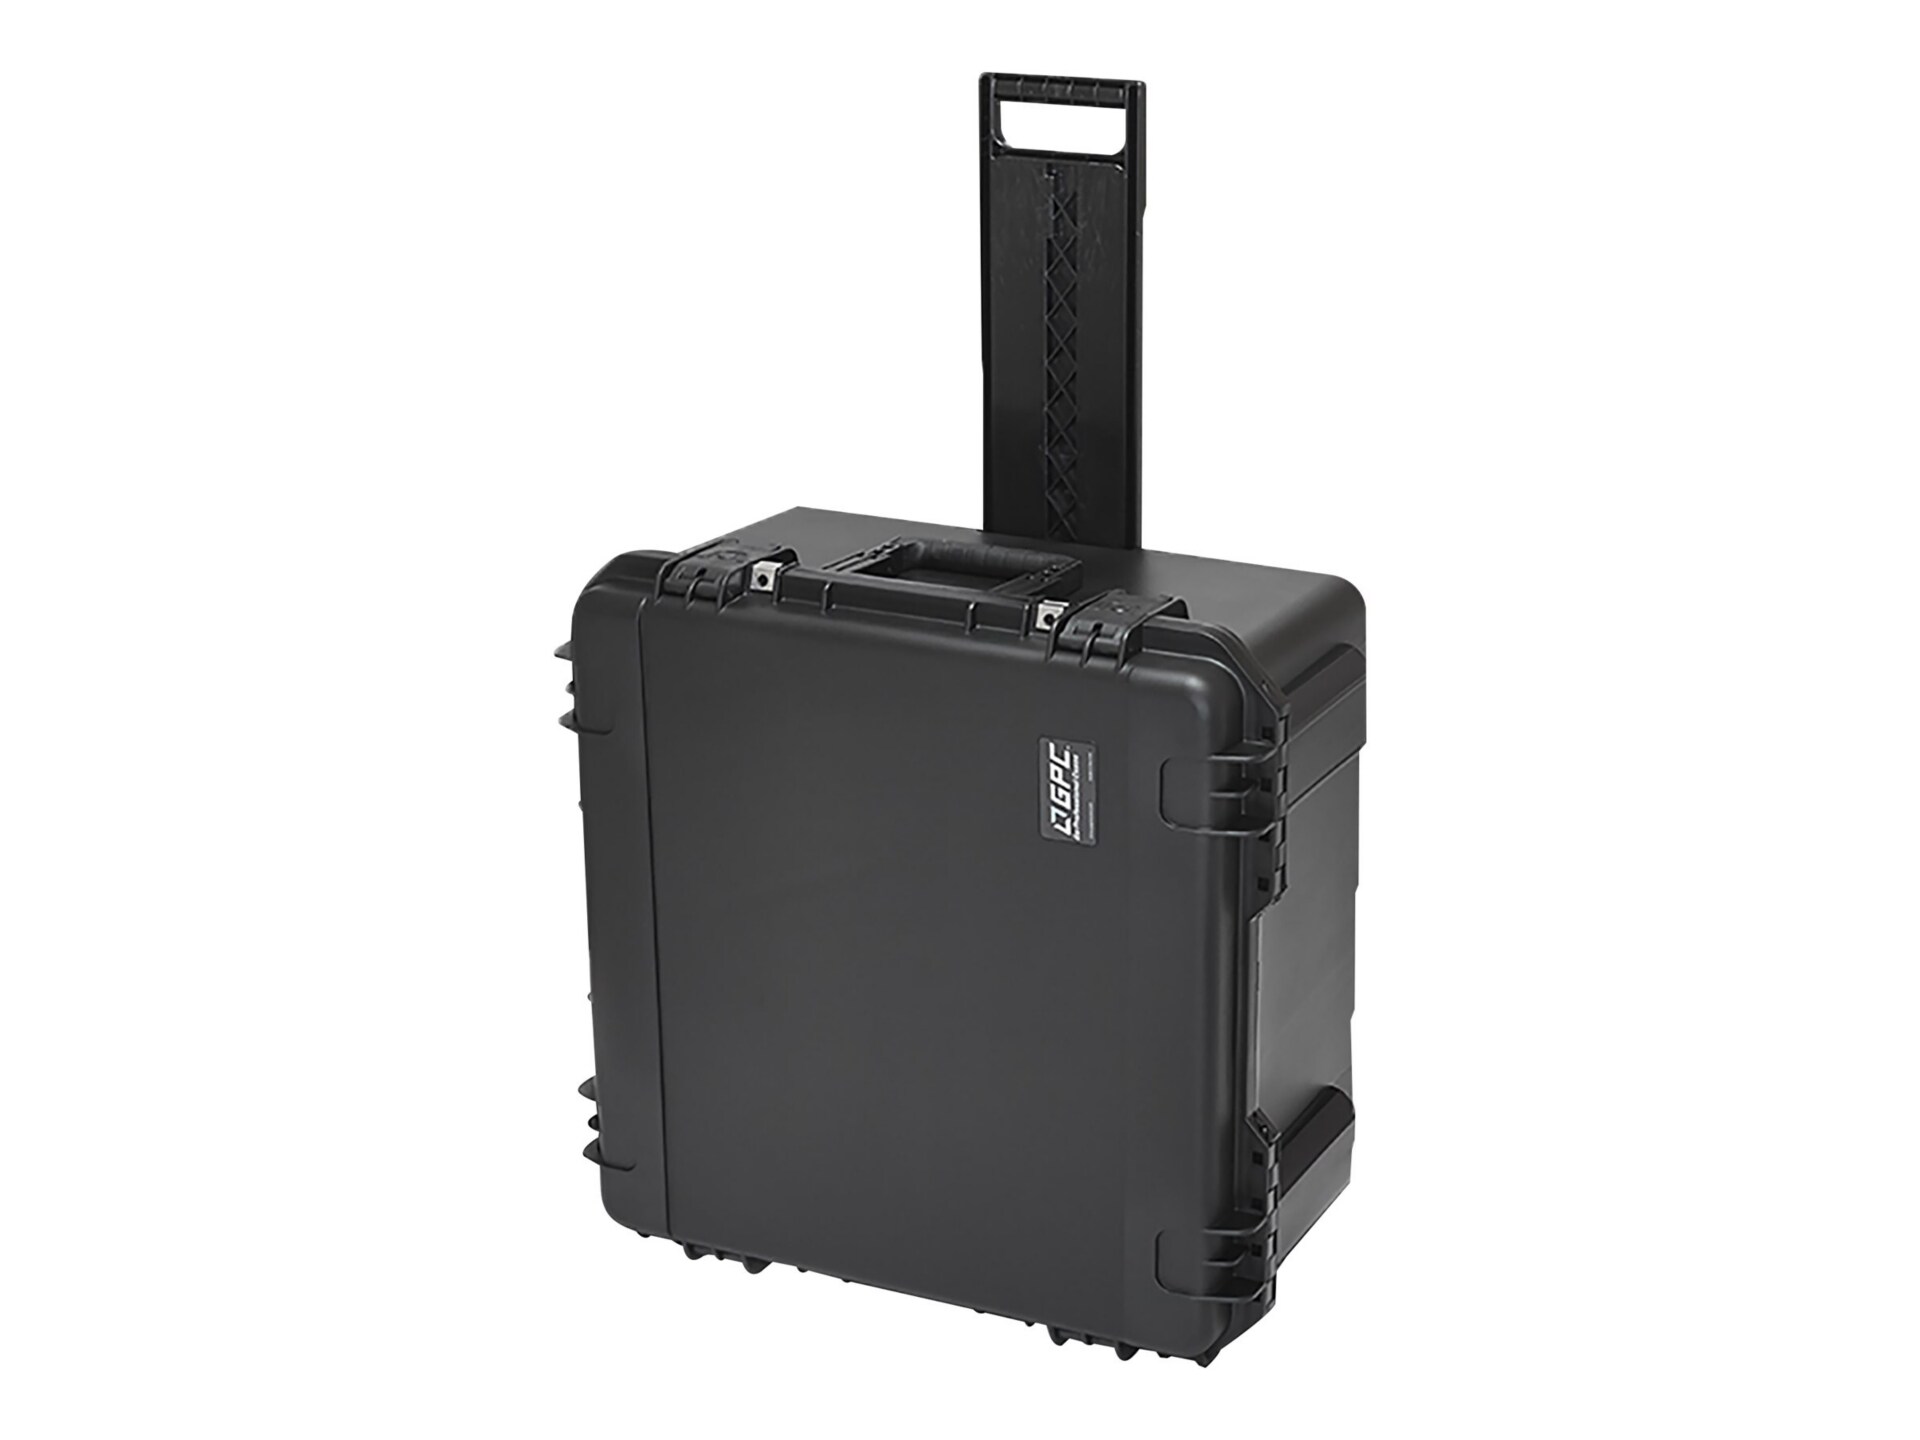 GPC DJI Matrice 100 Case - hard case for drone